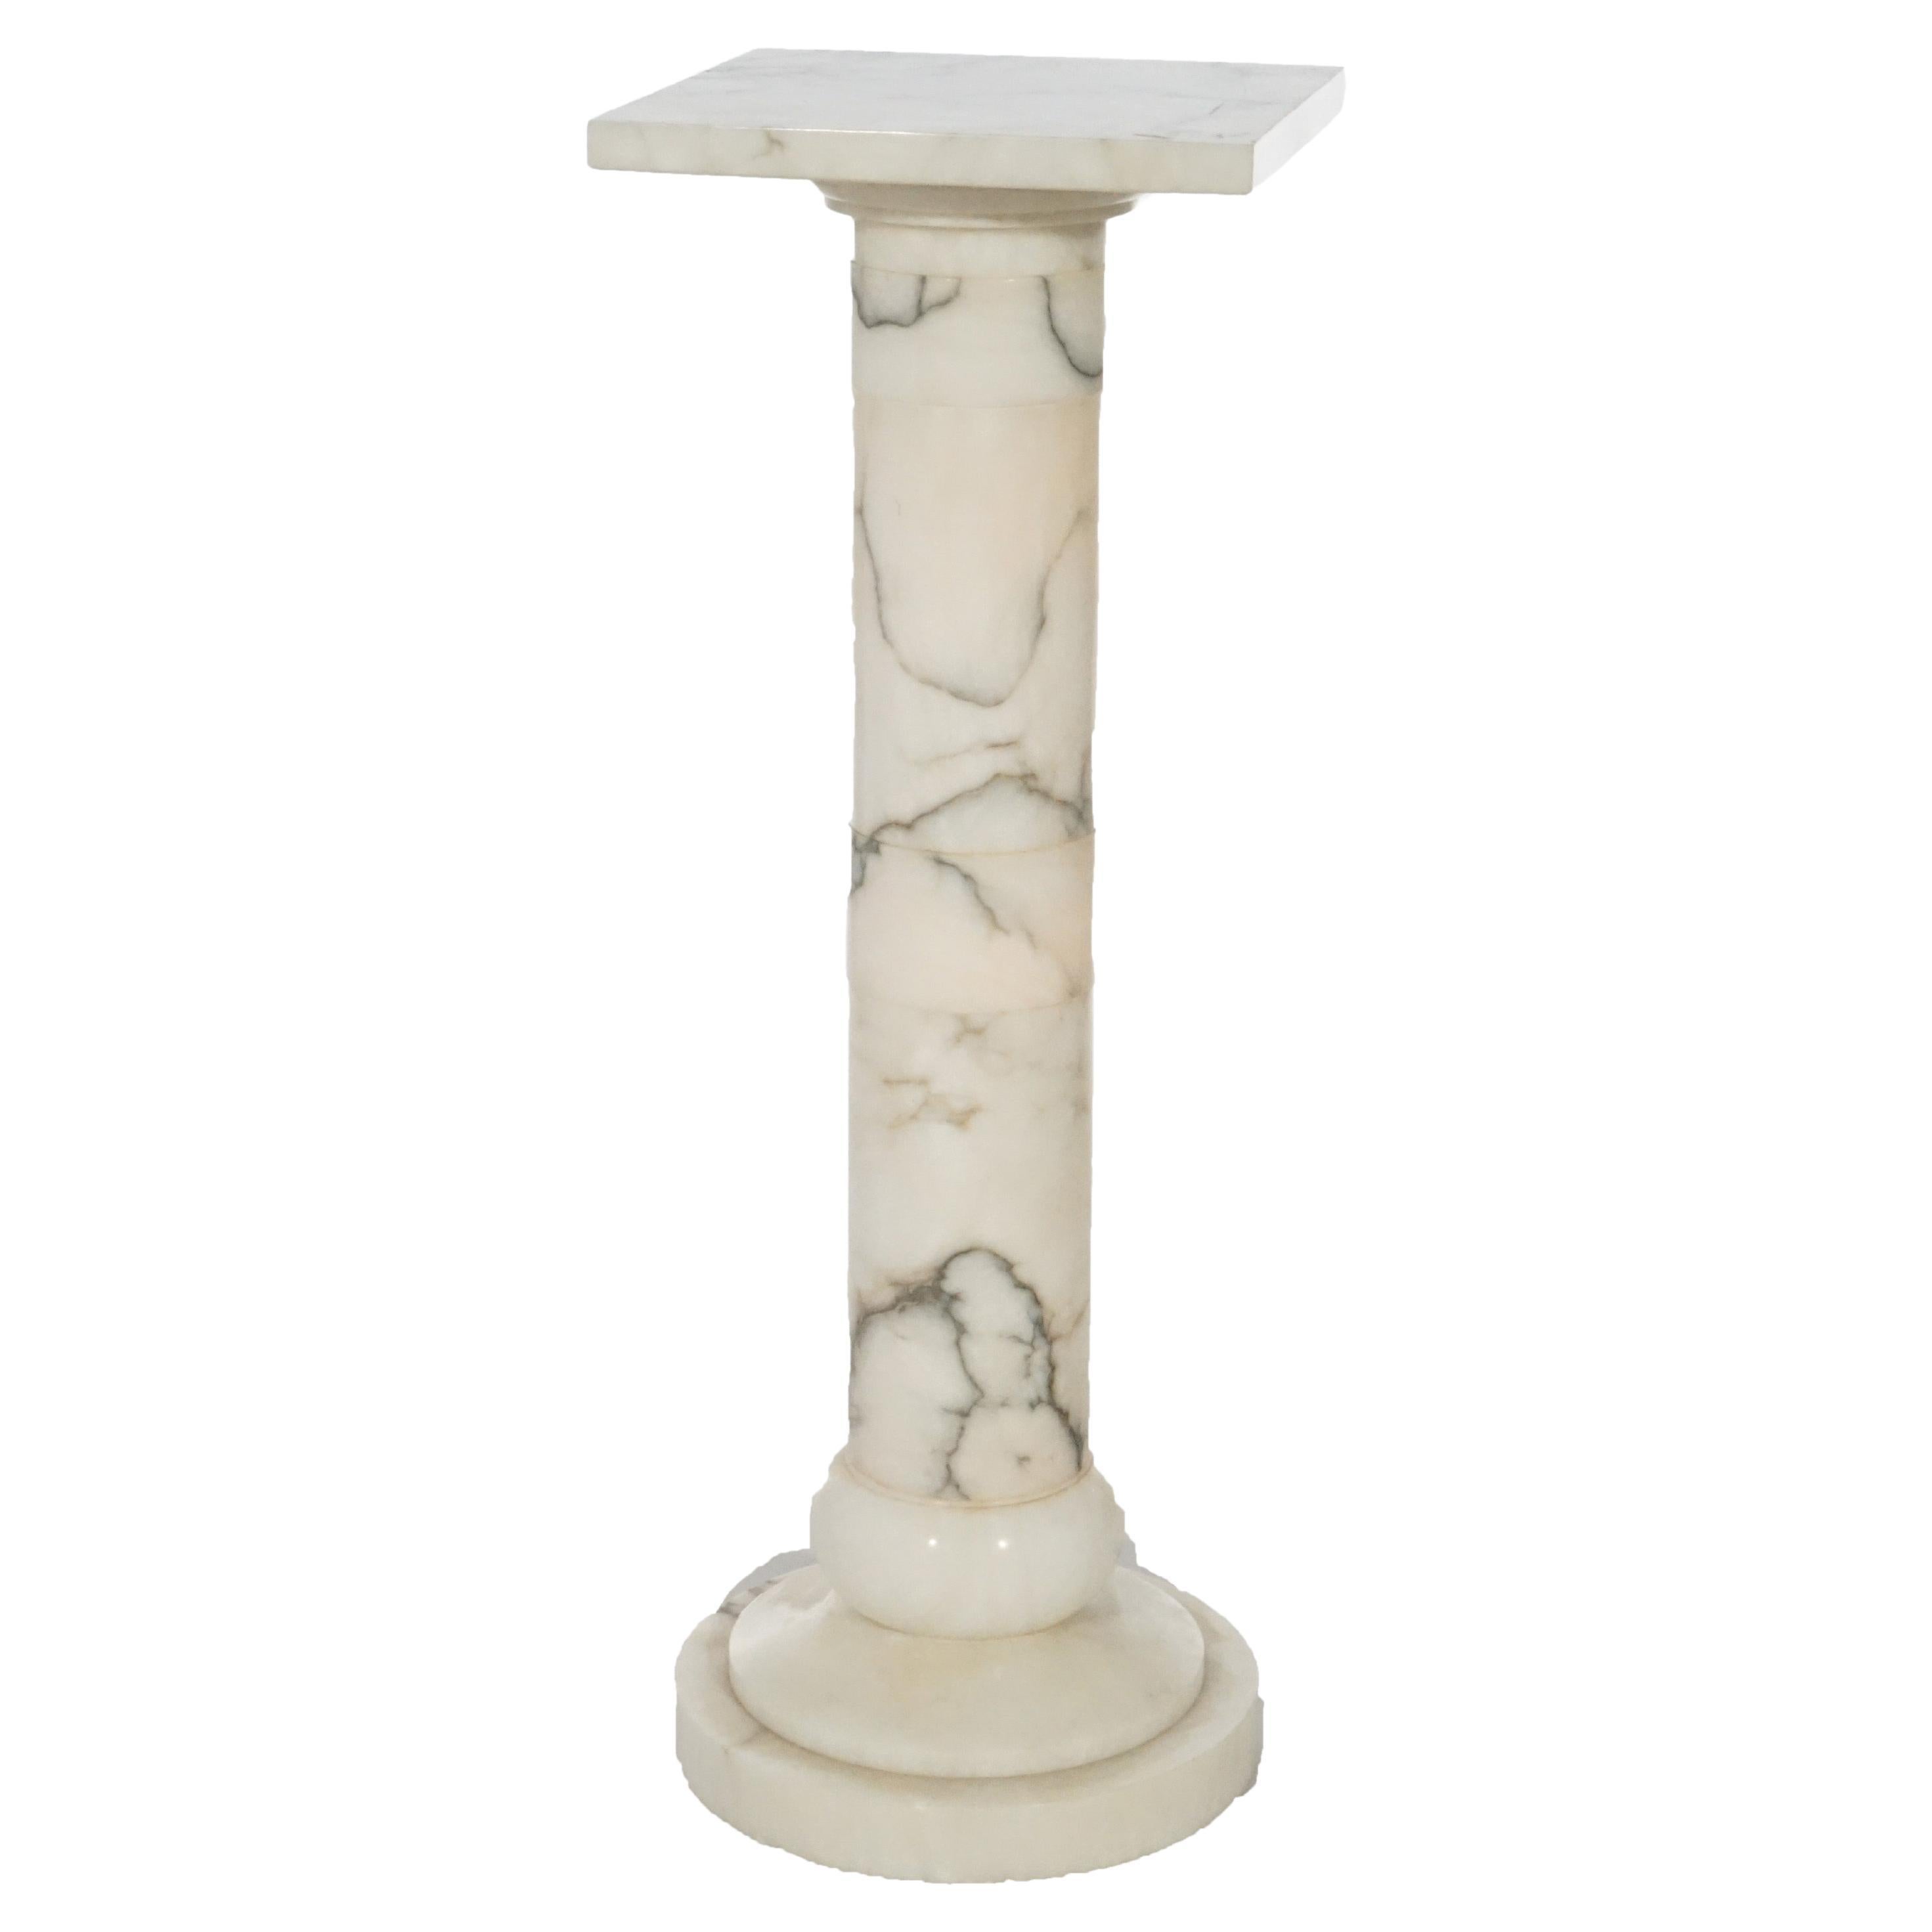 Antique Classical Marble Sculpture Display Pedestal, Lighted, Circa 1890